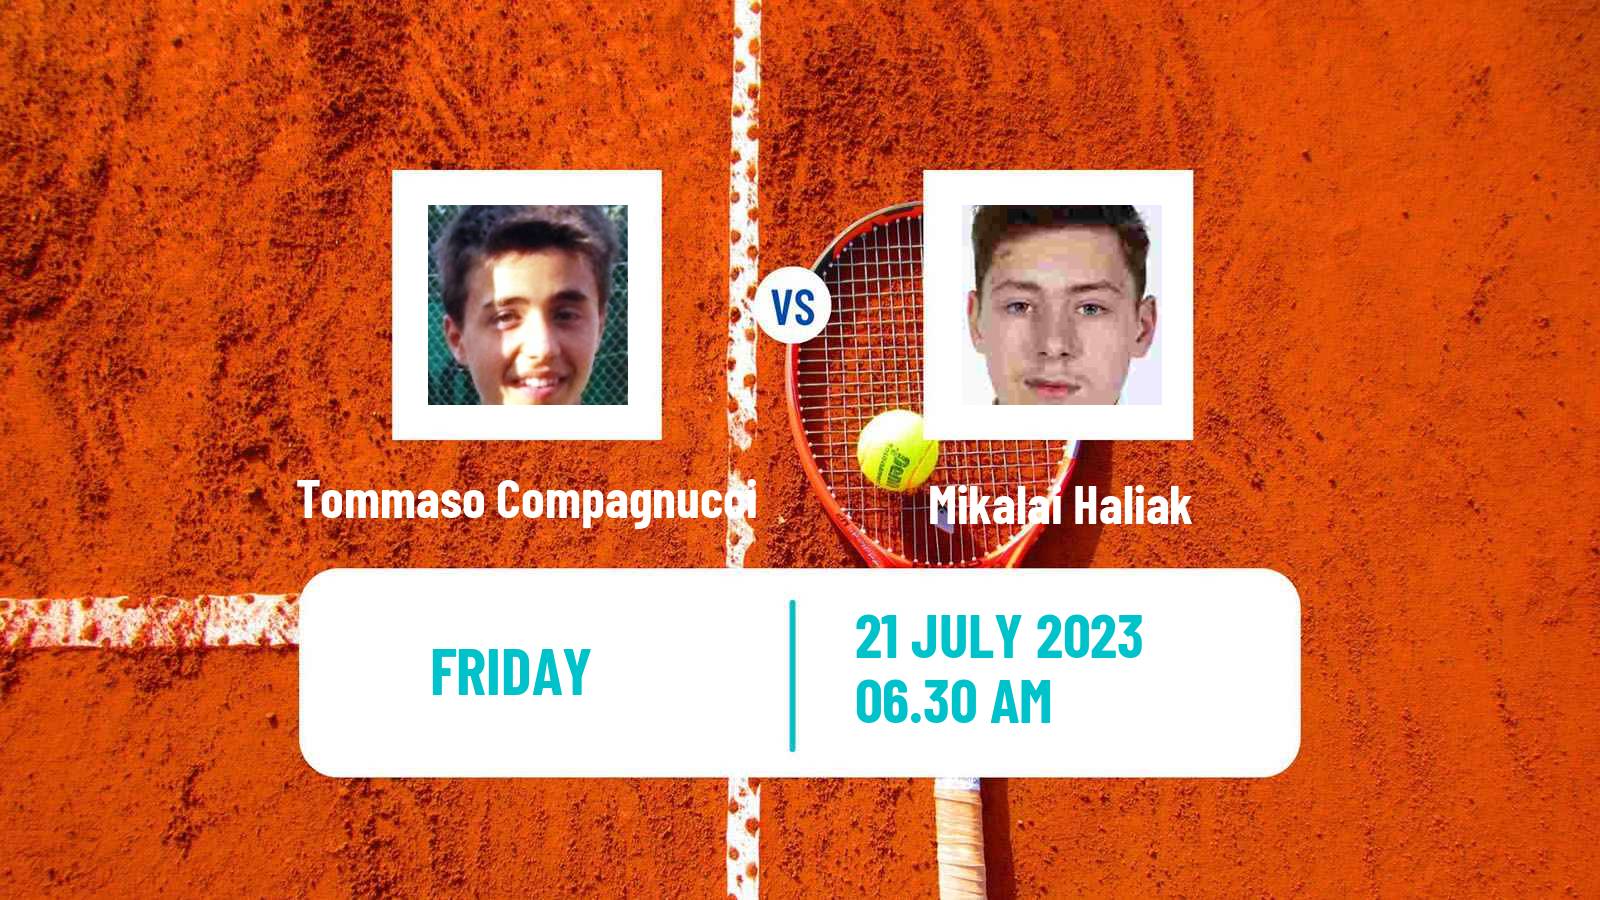 Tennis ITF M25 Esch Alzette 2 Men Tommaso Compagnucci - Mikalai Haliak